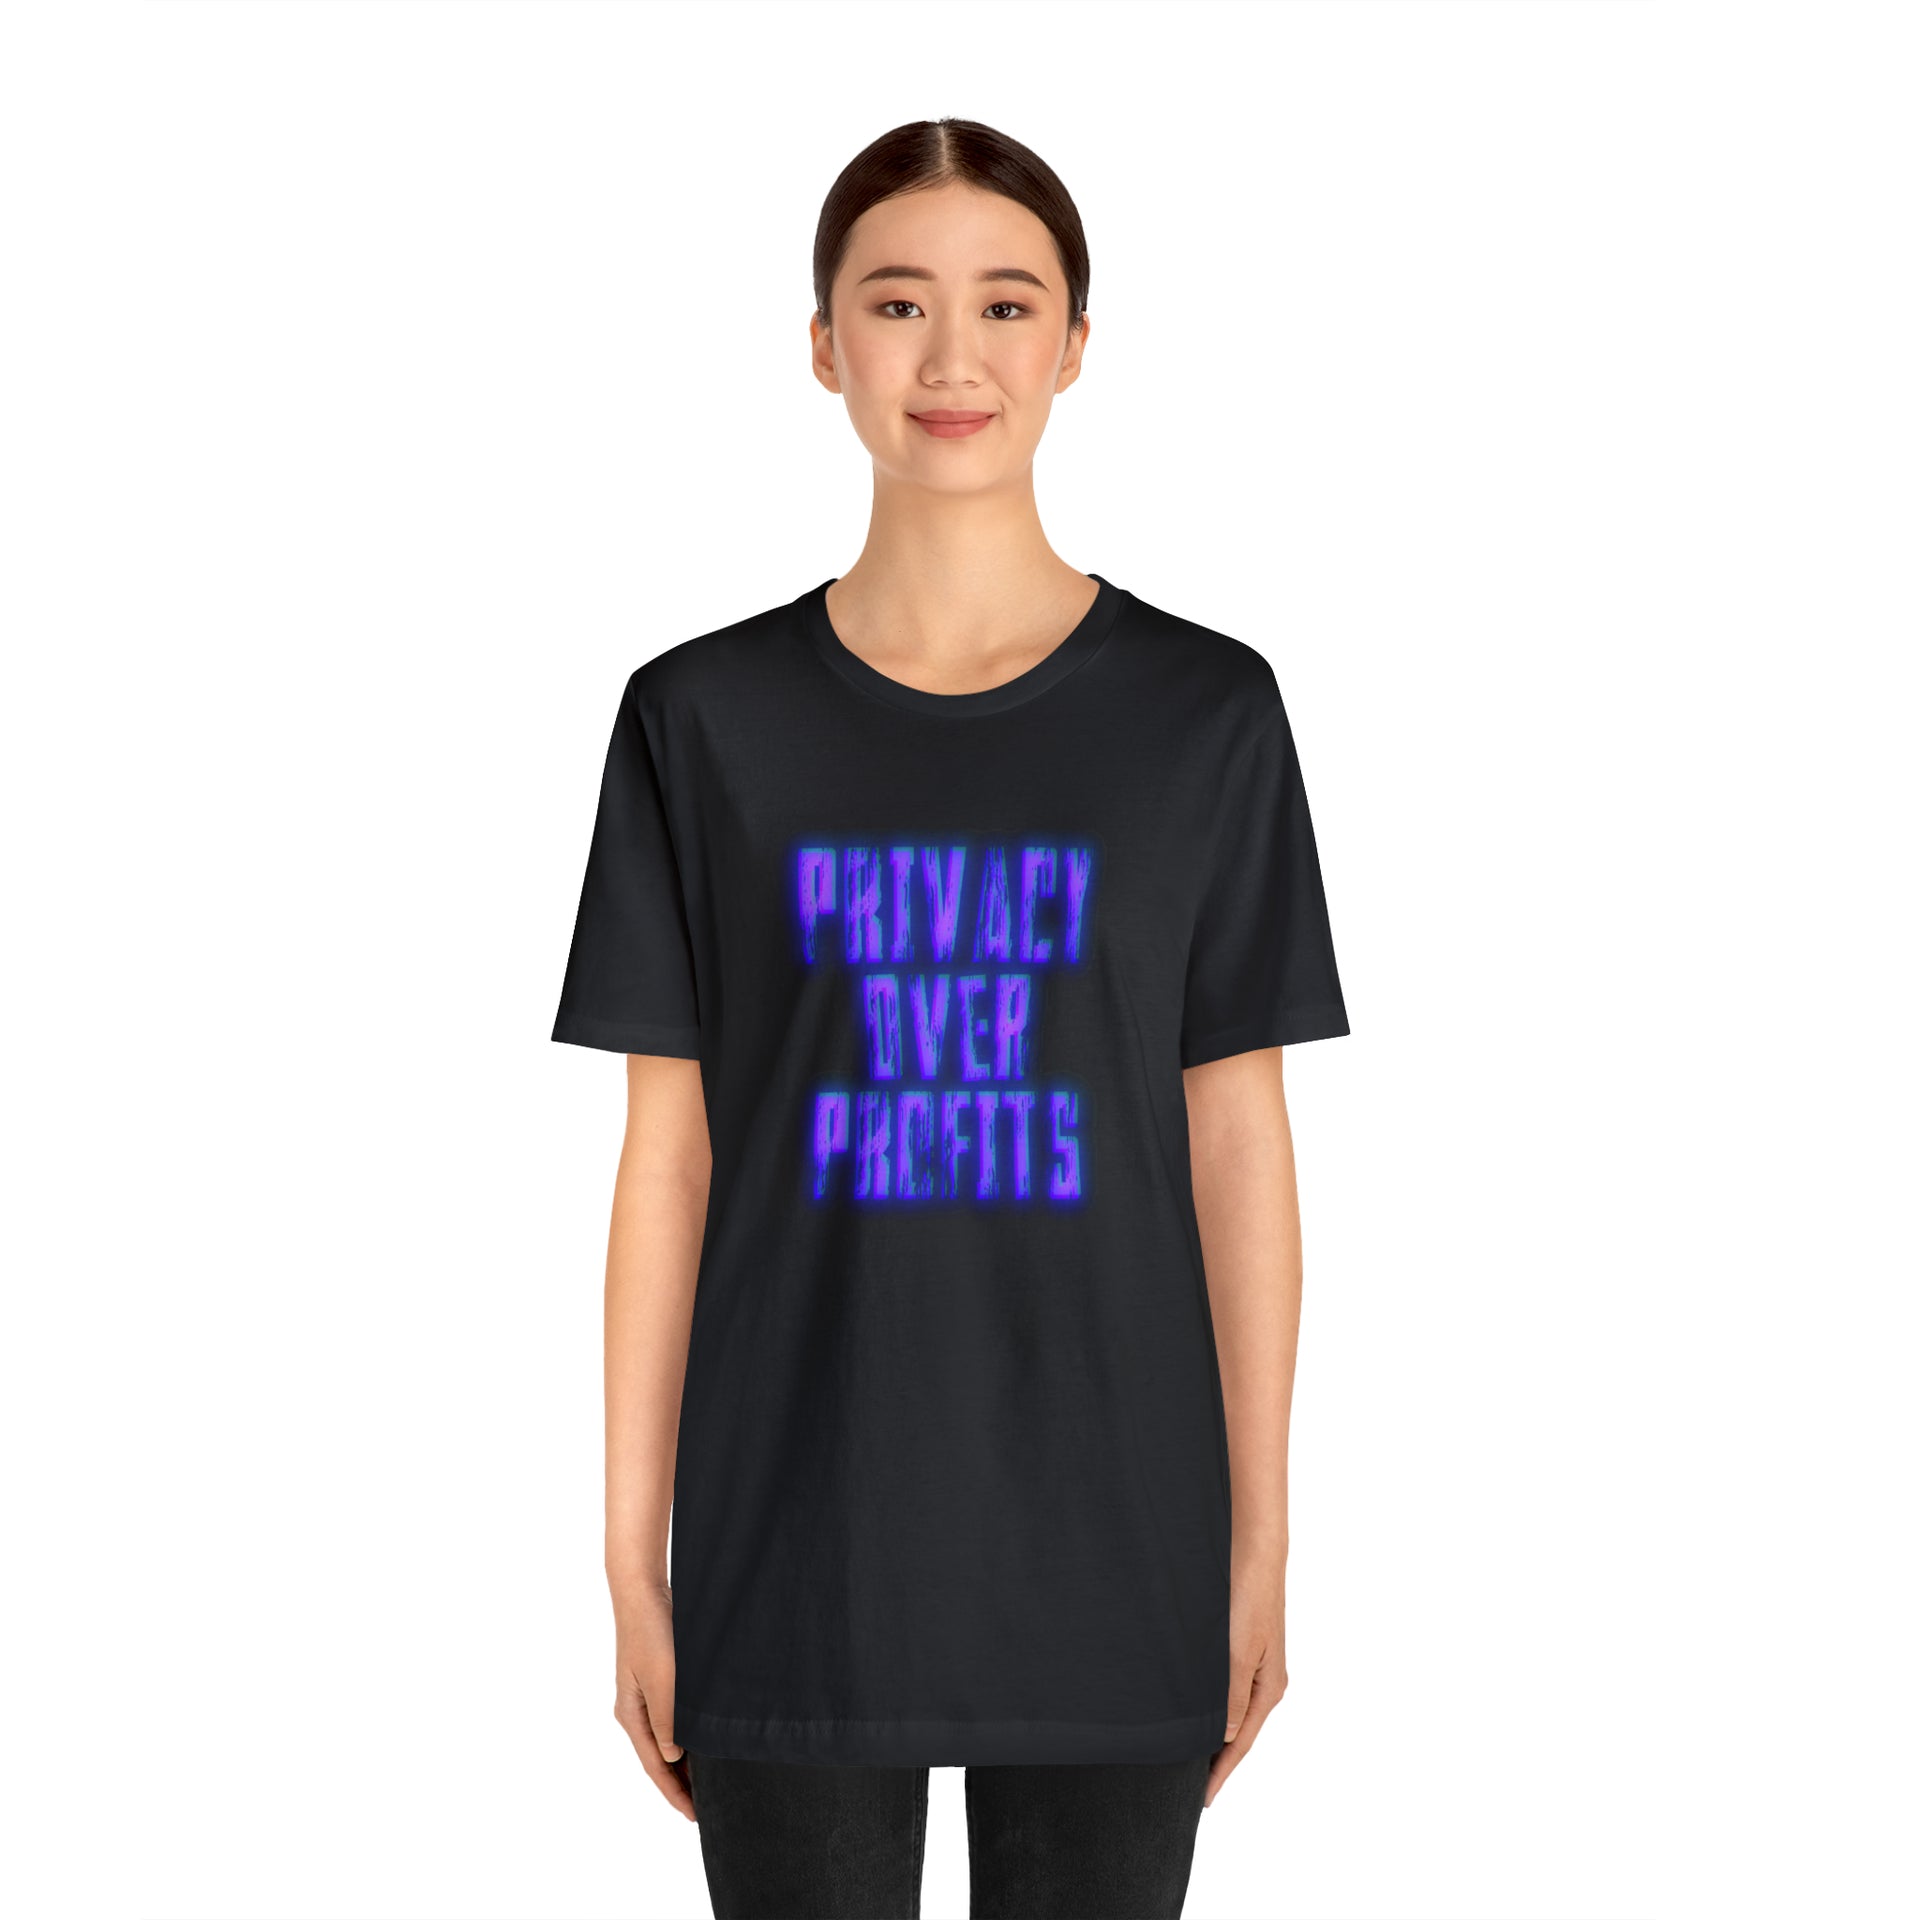 Privacy Over Profit (Unisex T-Shirt)